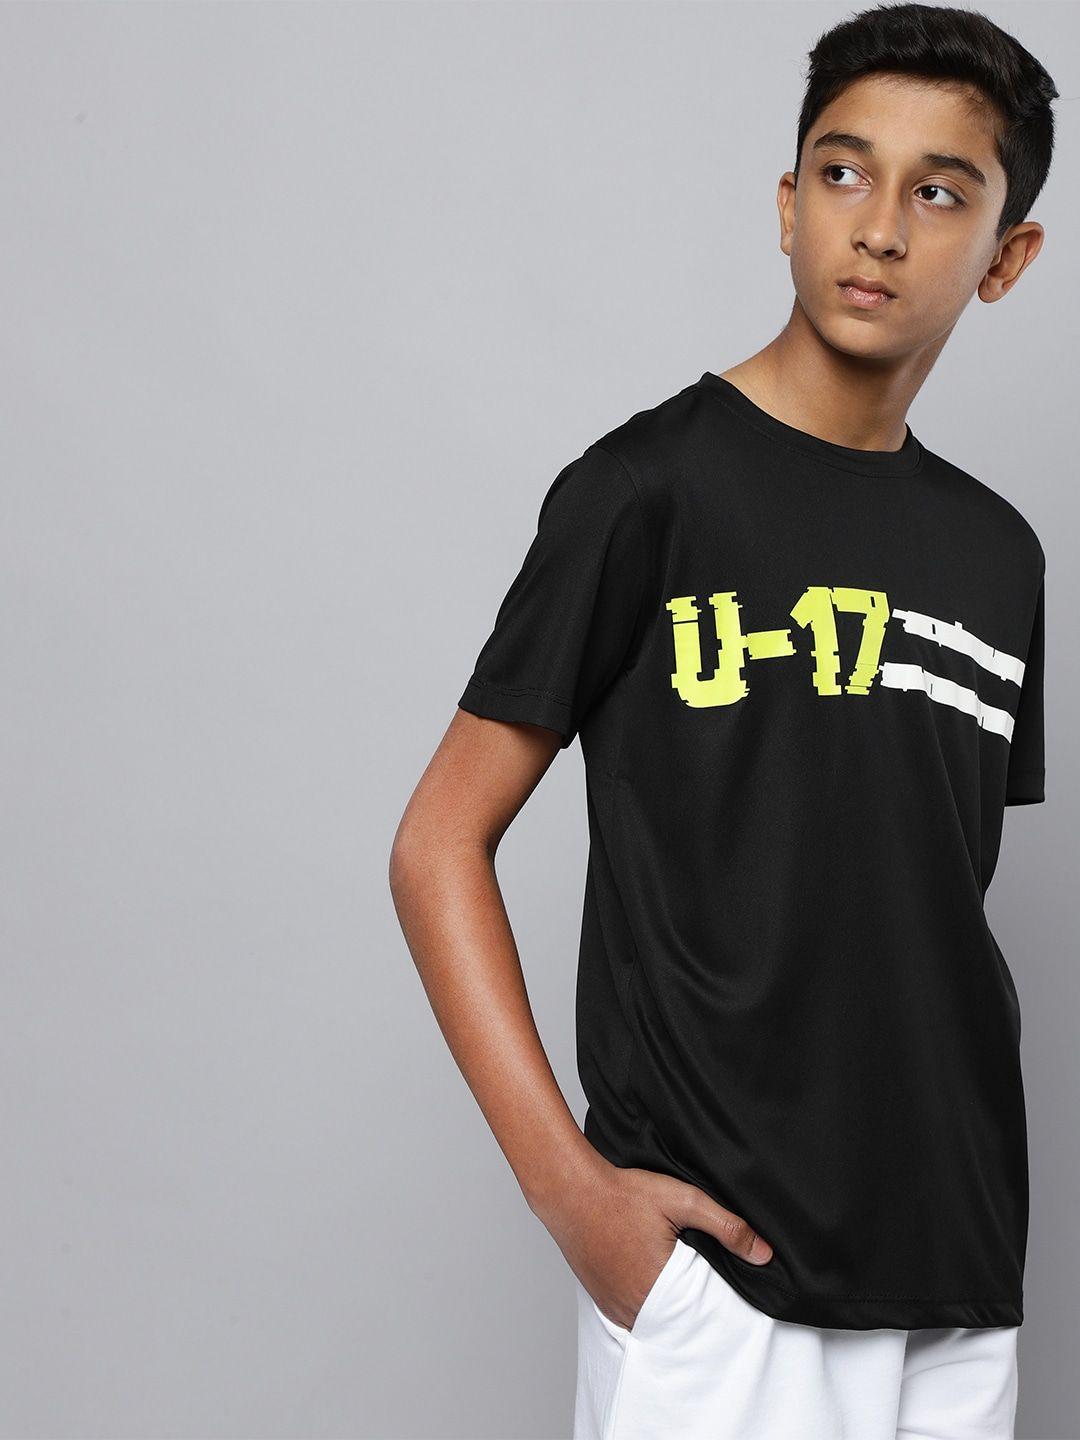 hrx by hrithik roshan active boys jet black rapid-dry brand carrier tshirts